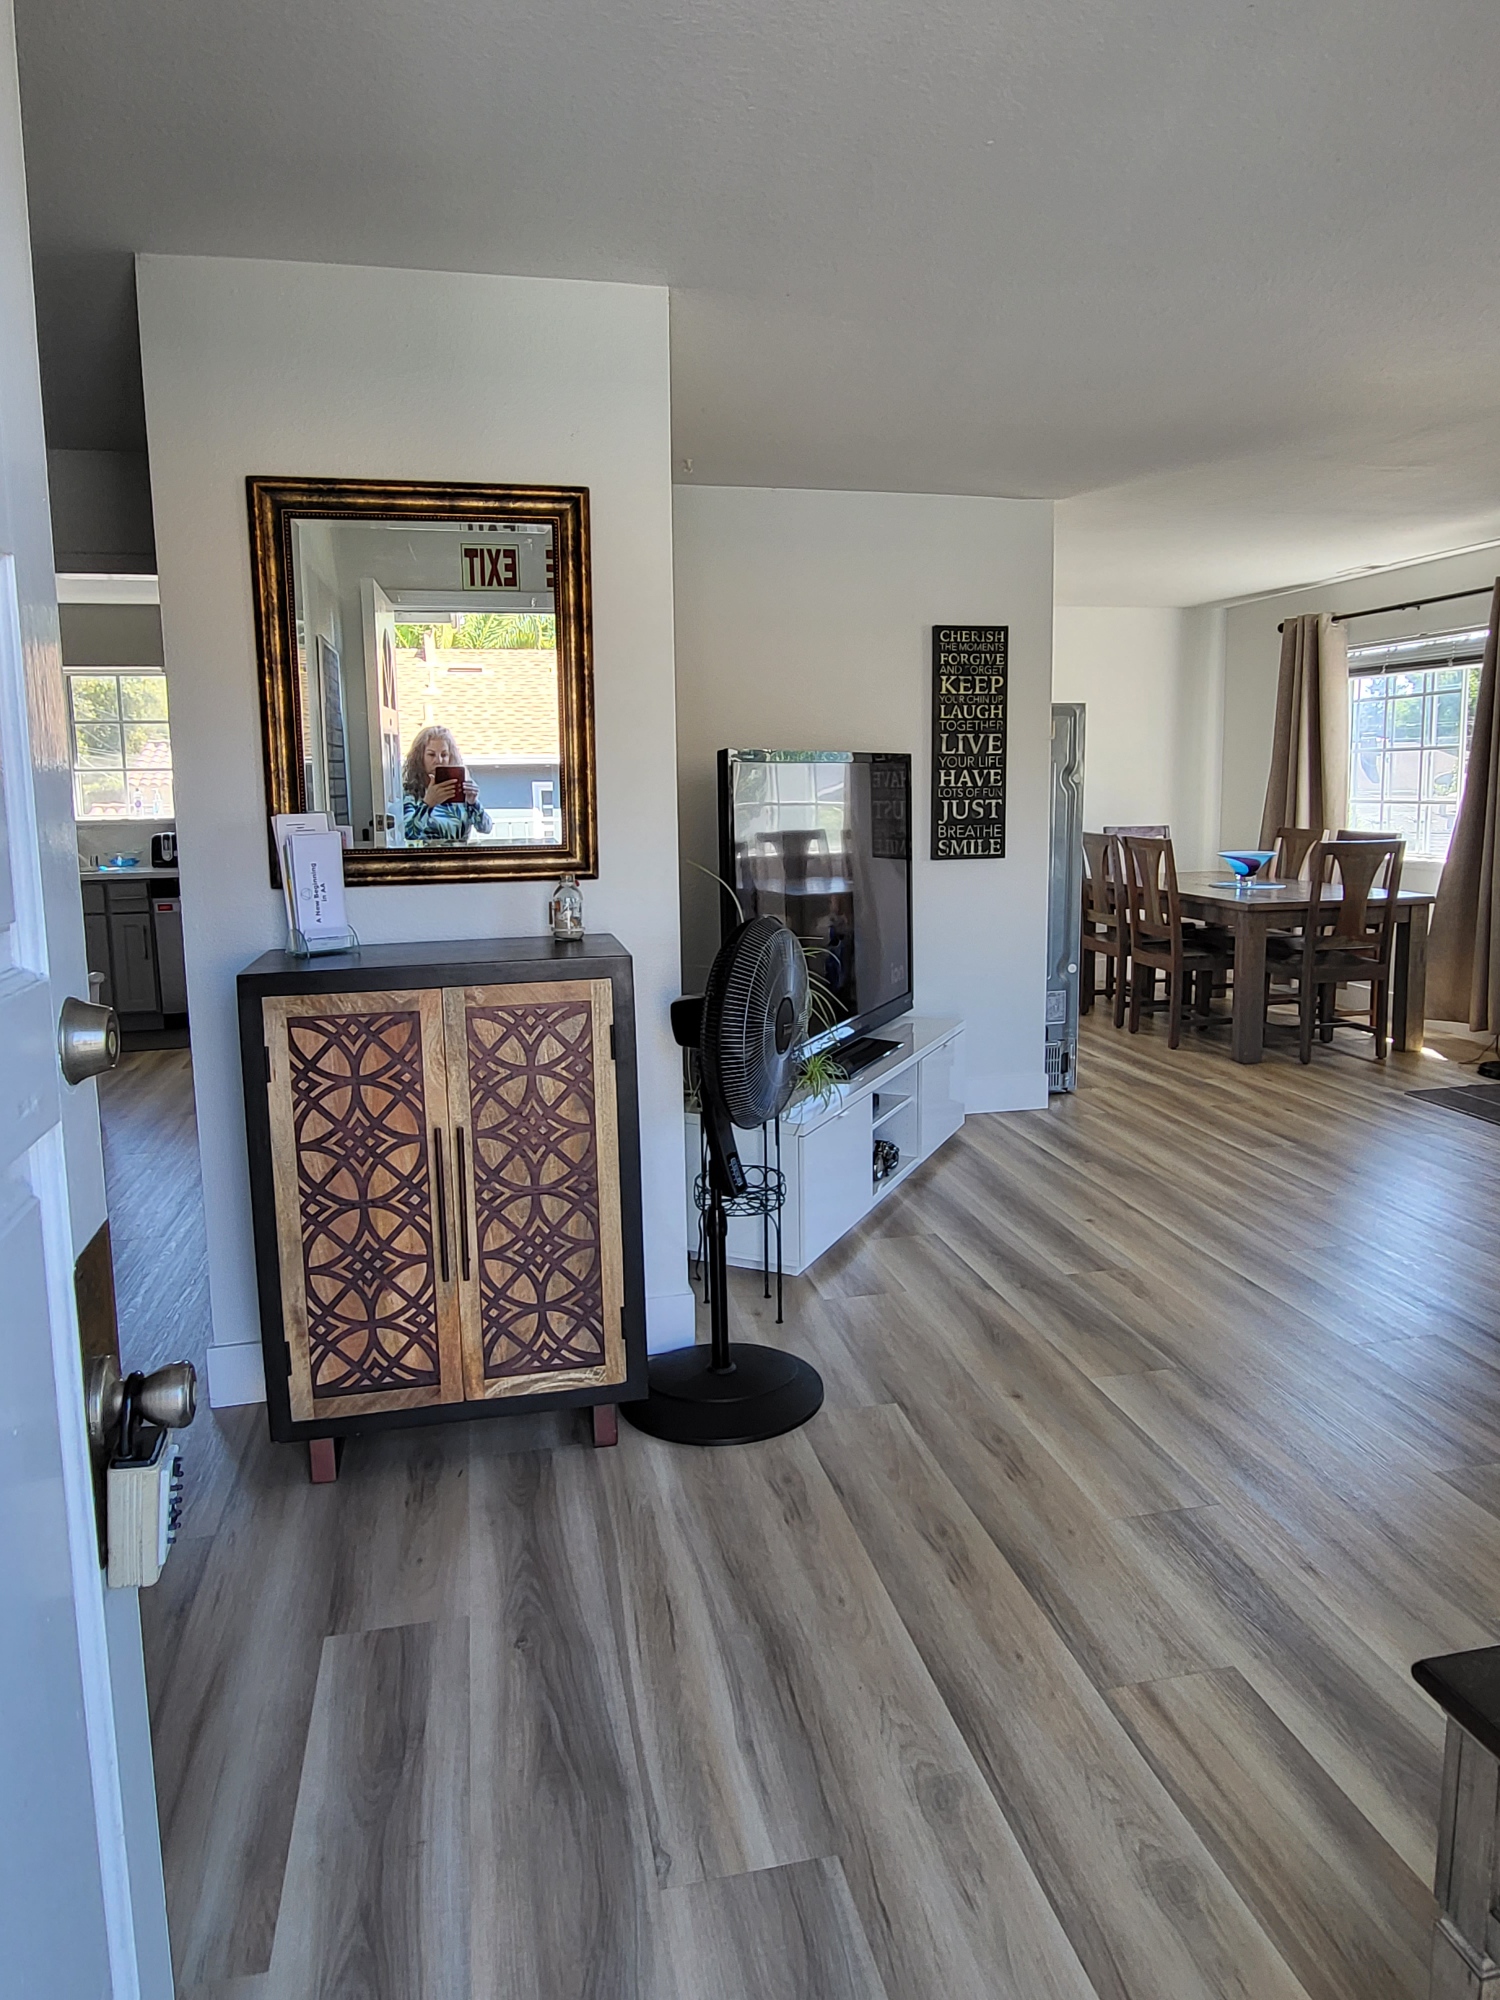 Eldorado Upscale SLE in San Mateo, California has Private and 2-Man Rooms